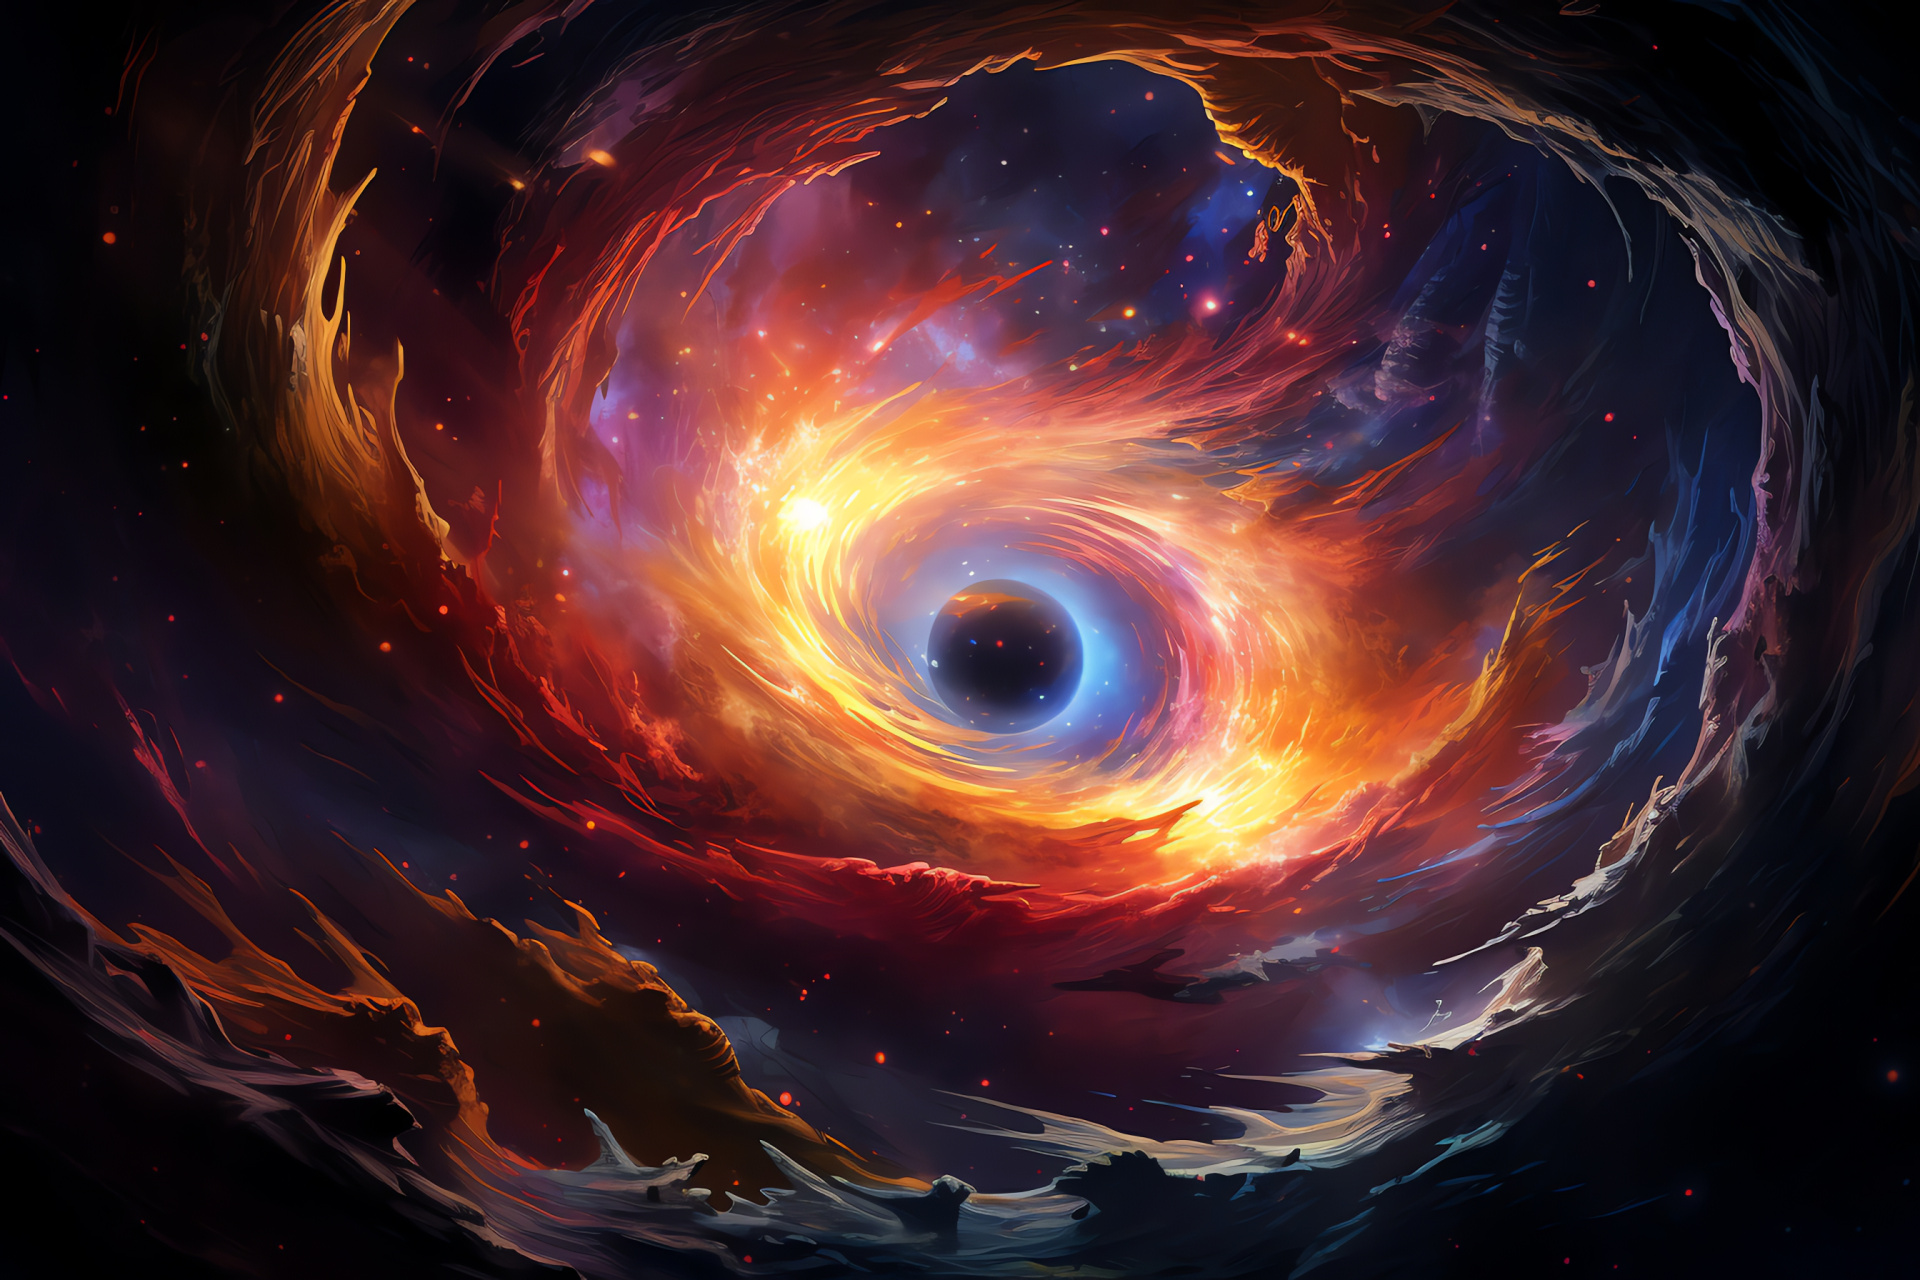 Cosmic event depiction, Galactic journey concept, Interdimensional passage, Infinity conduit, Nebulous phenomenon, HD Desktop Image